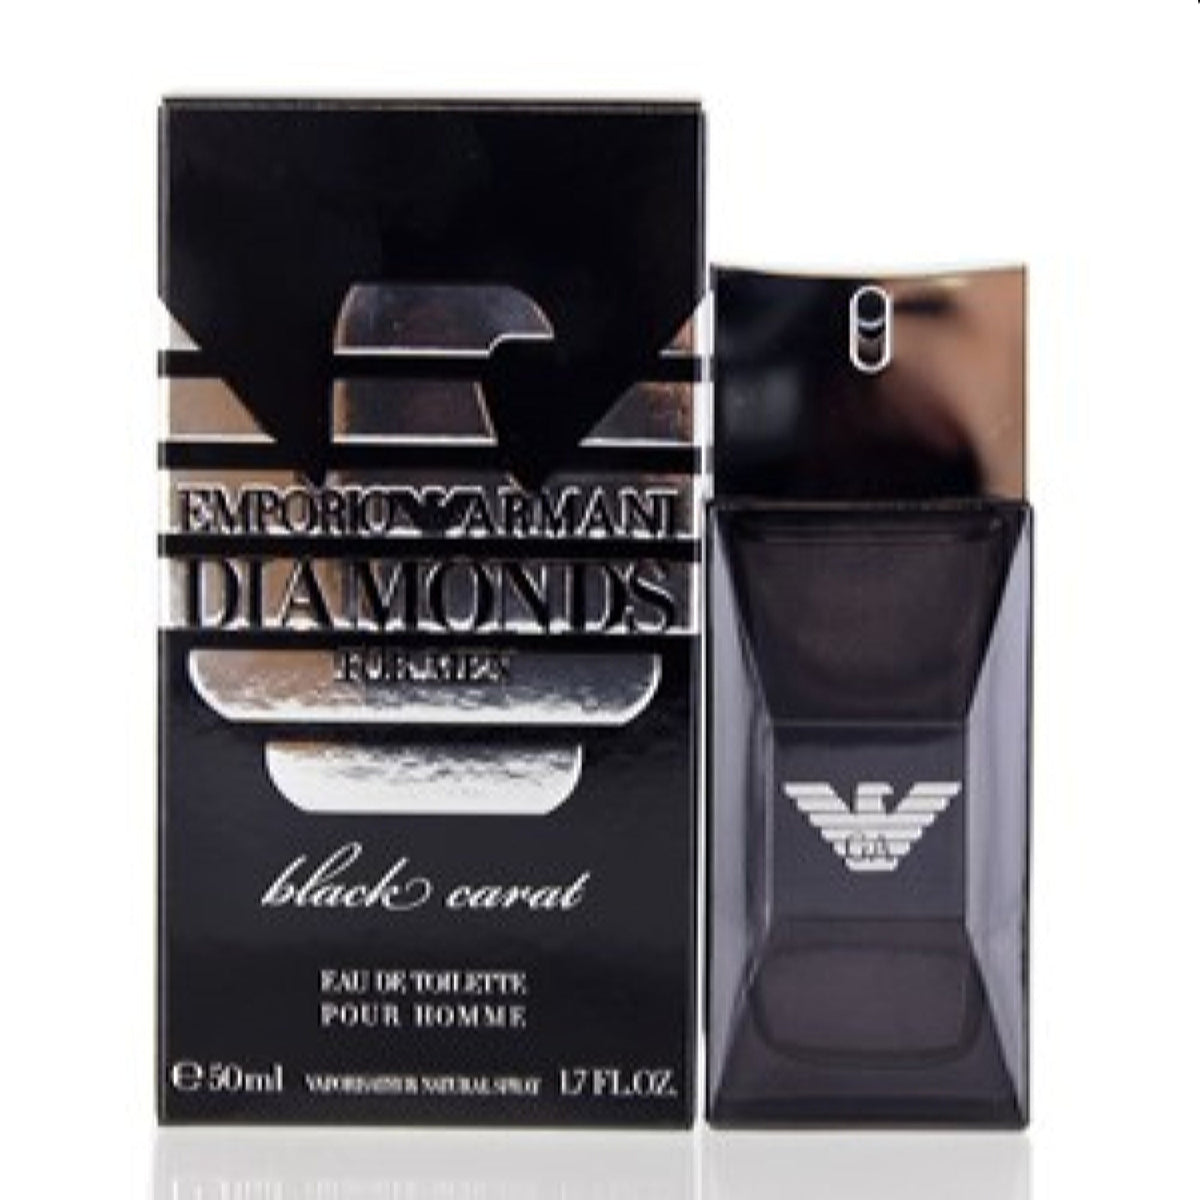 Emporio Diamond Black Carat Giorgio Armani Edt Spray 1.7 Oz (50 Ml) For Men 1709814